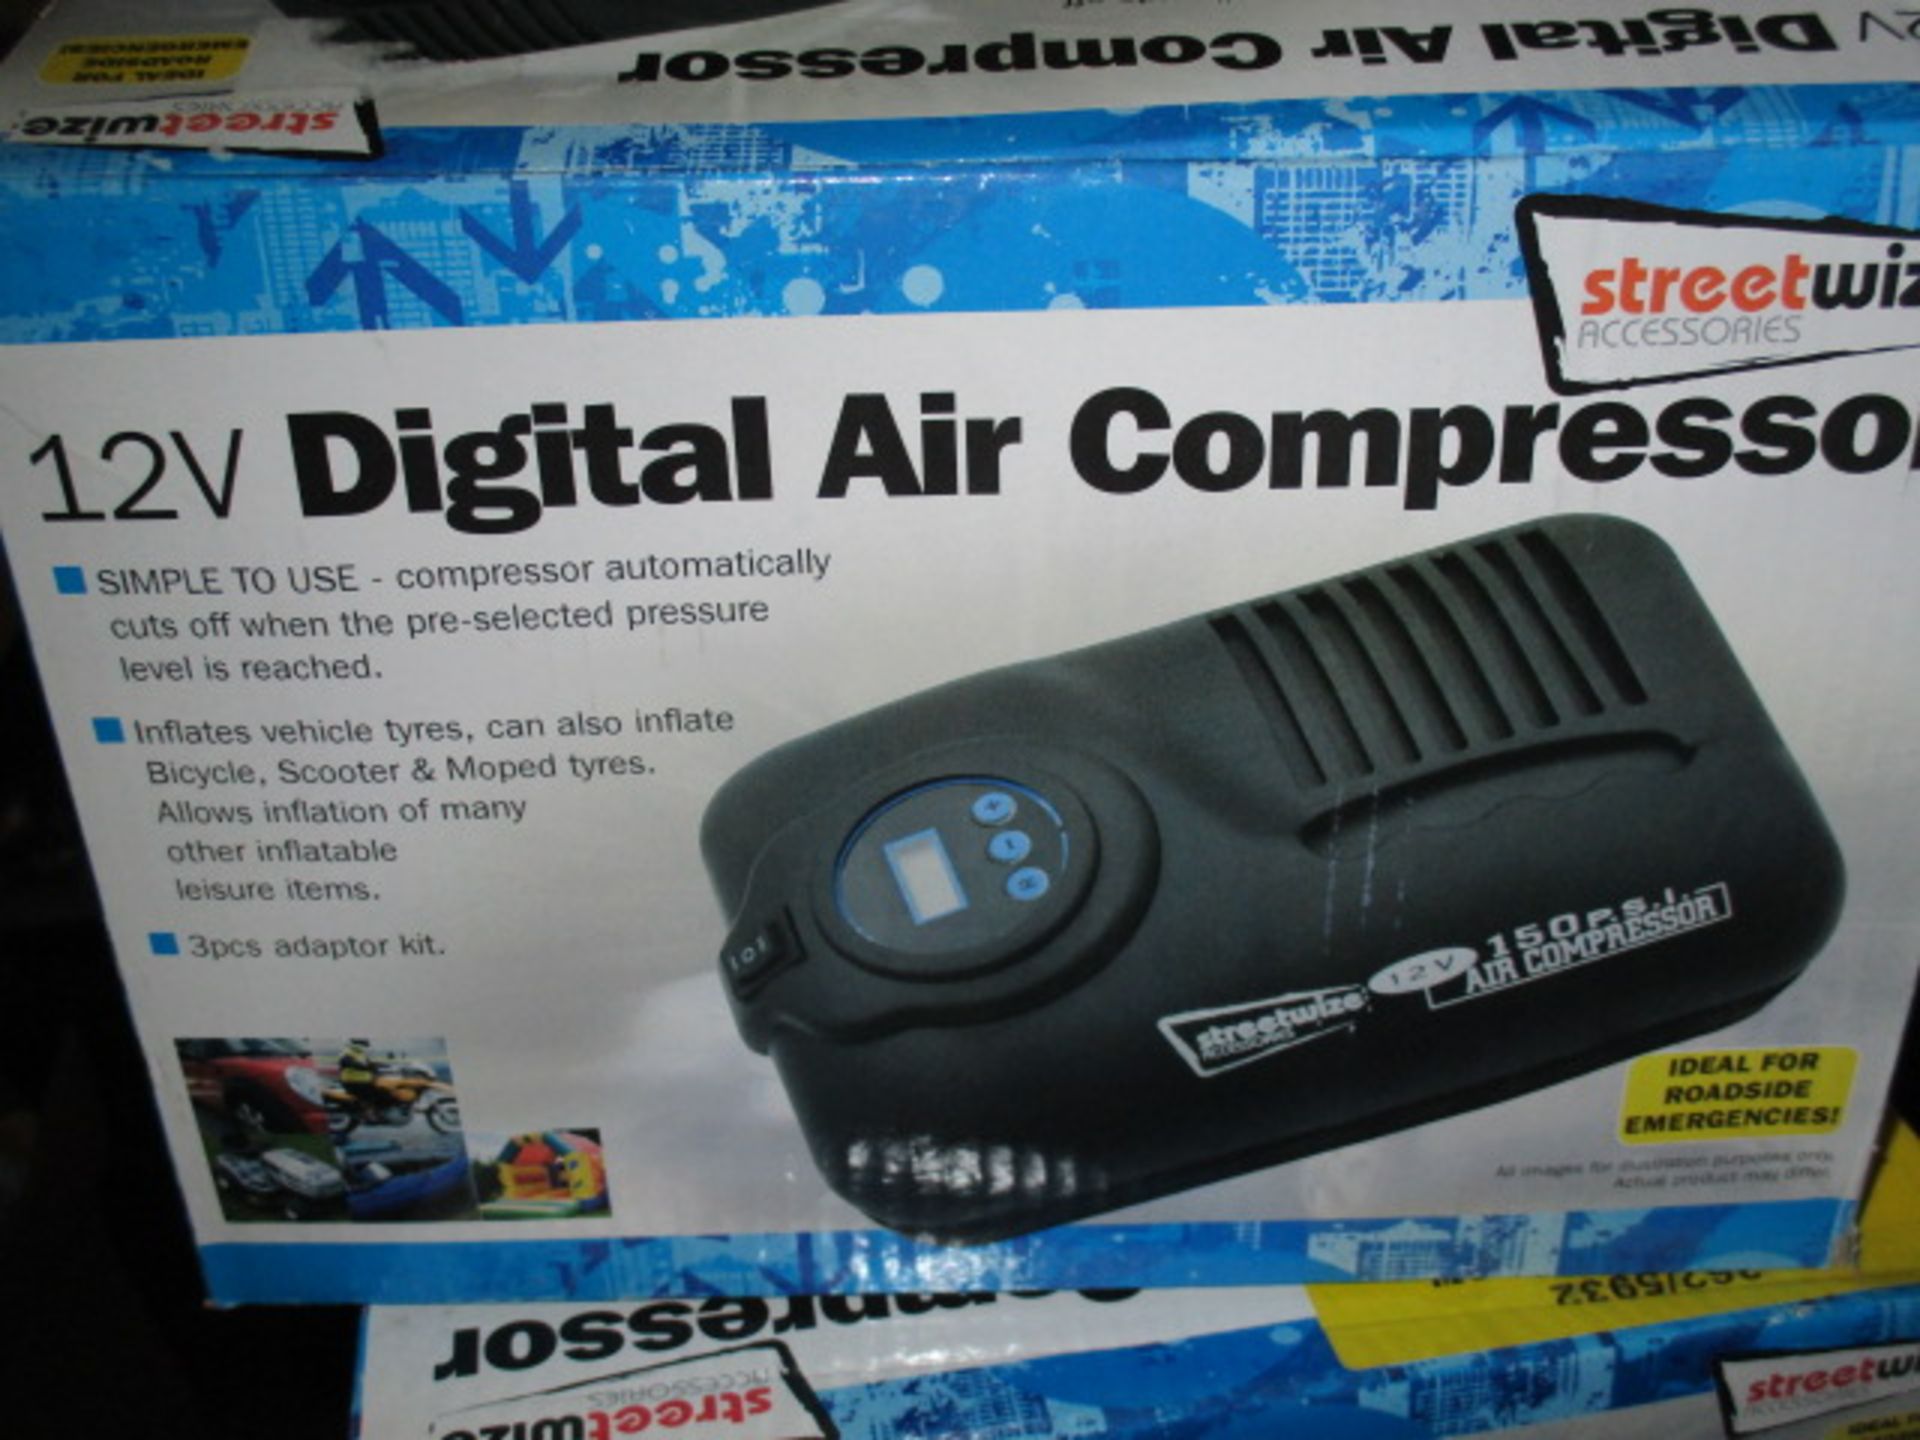 Boxed streetwize air compressor rrp œ19.99